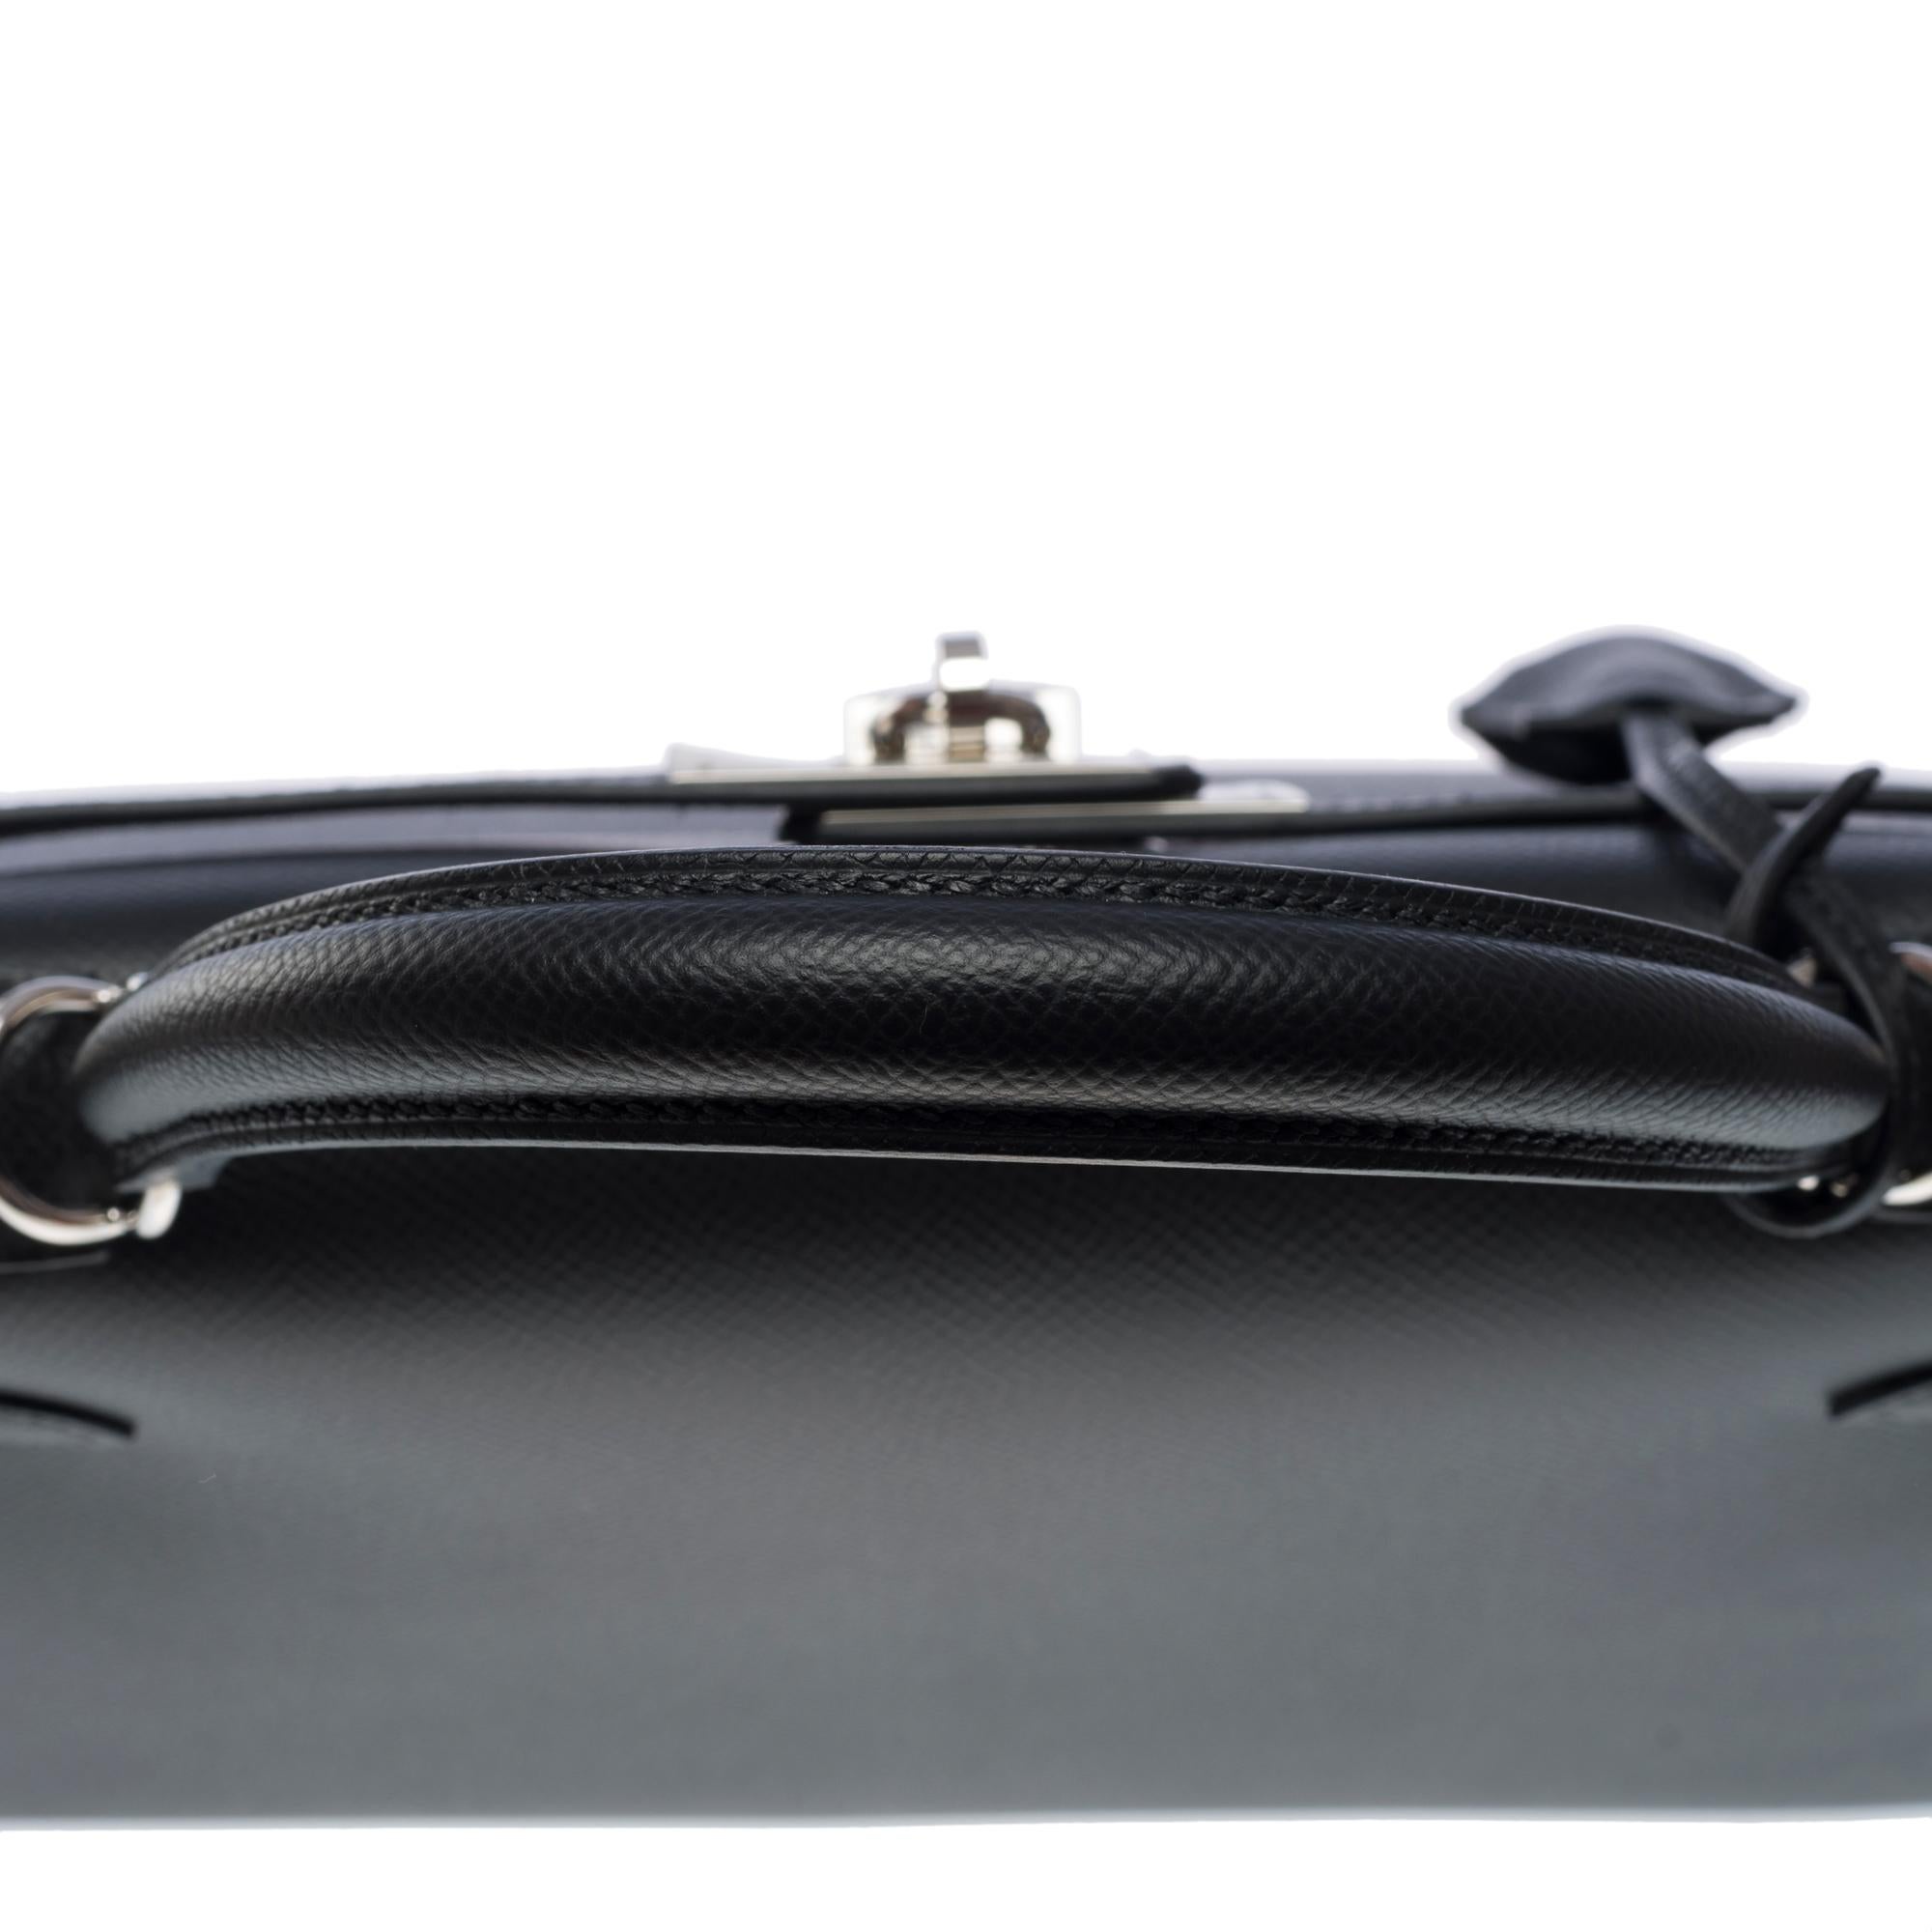 New Hermès Kelly 28 sellier handbag strap in black Epsom leather, SHW 3